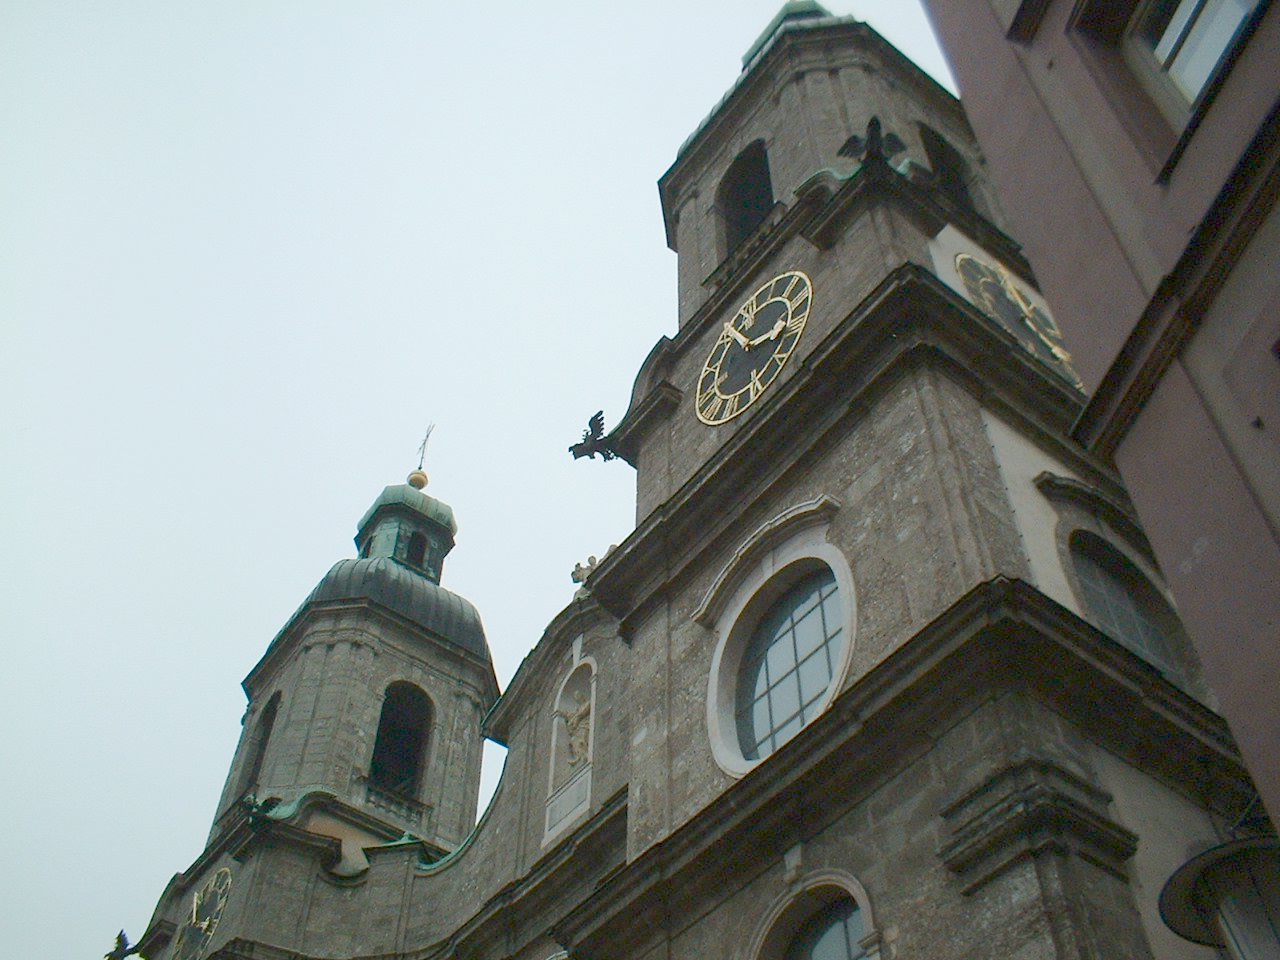 a church steeple with clocks on each side